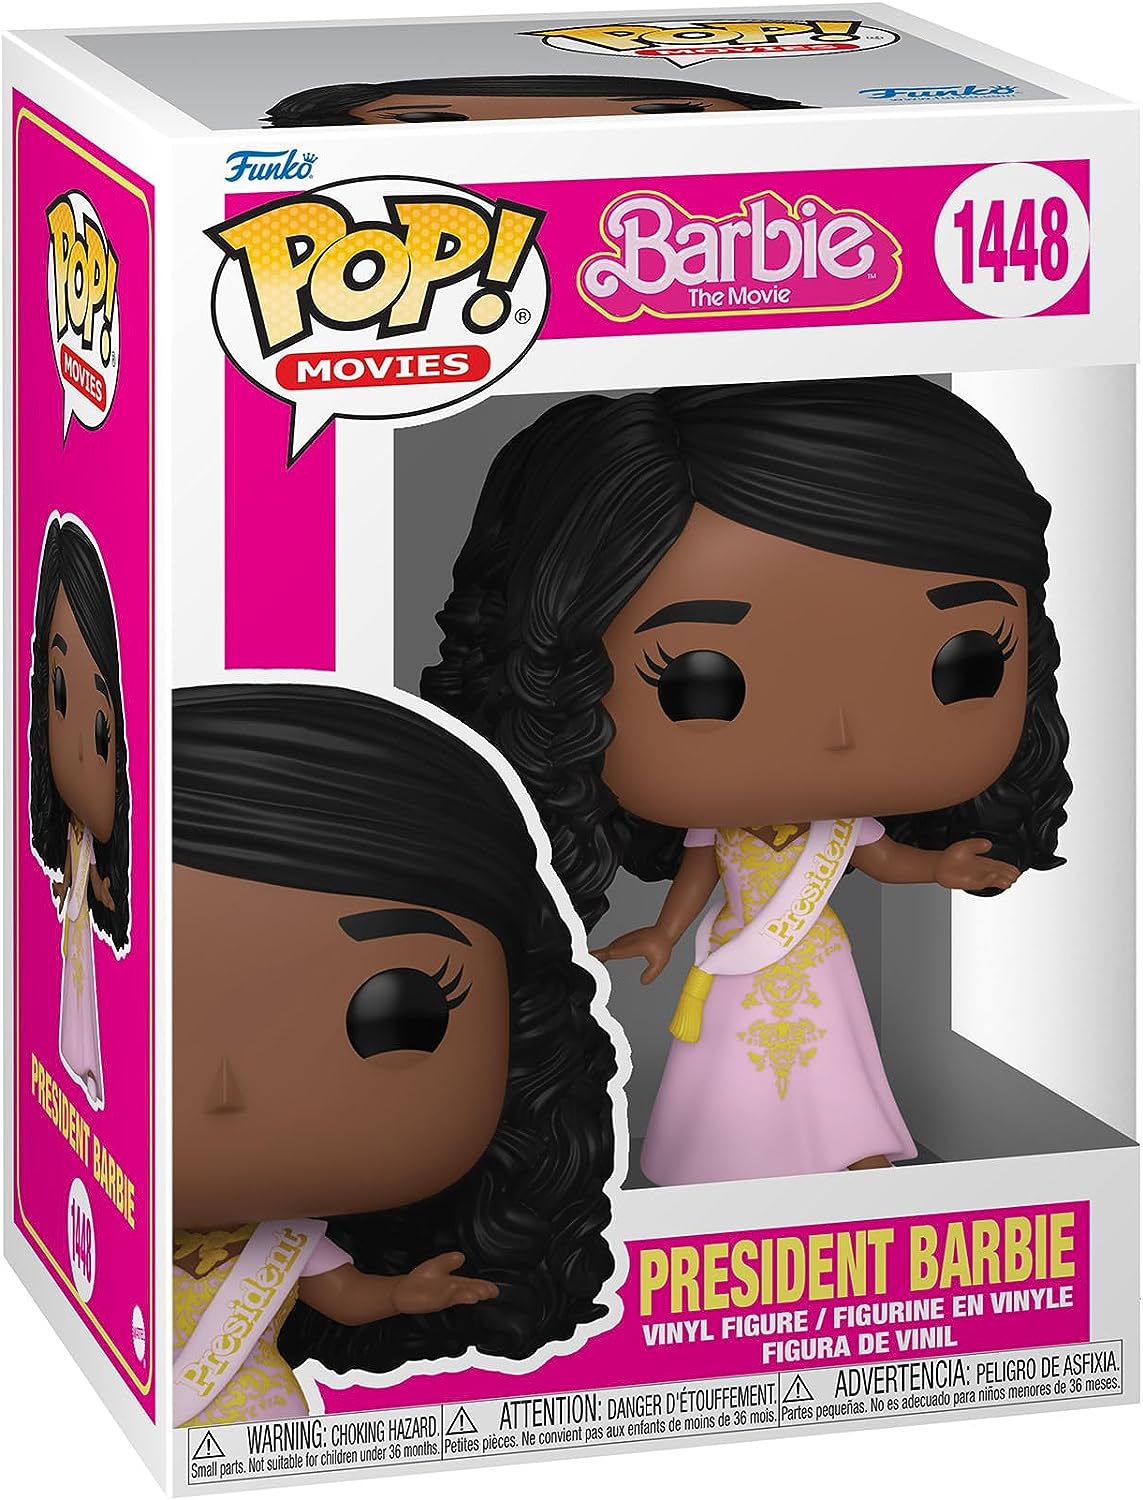 Pop! Vinyl/Barbie Movie - President Barbie [Toy]